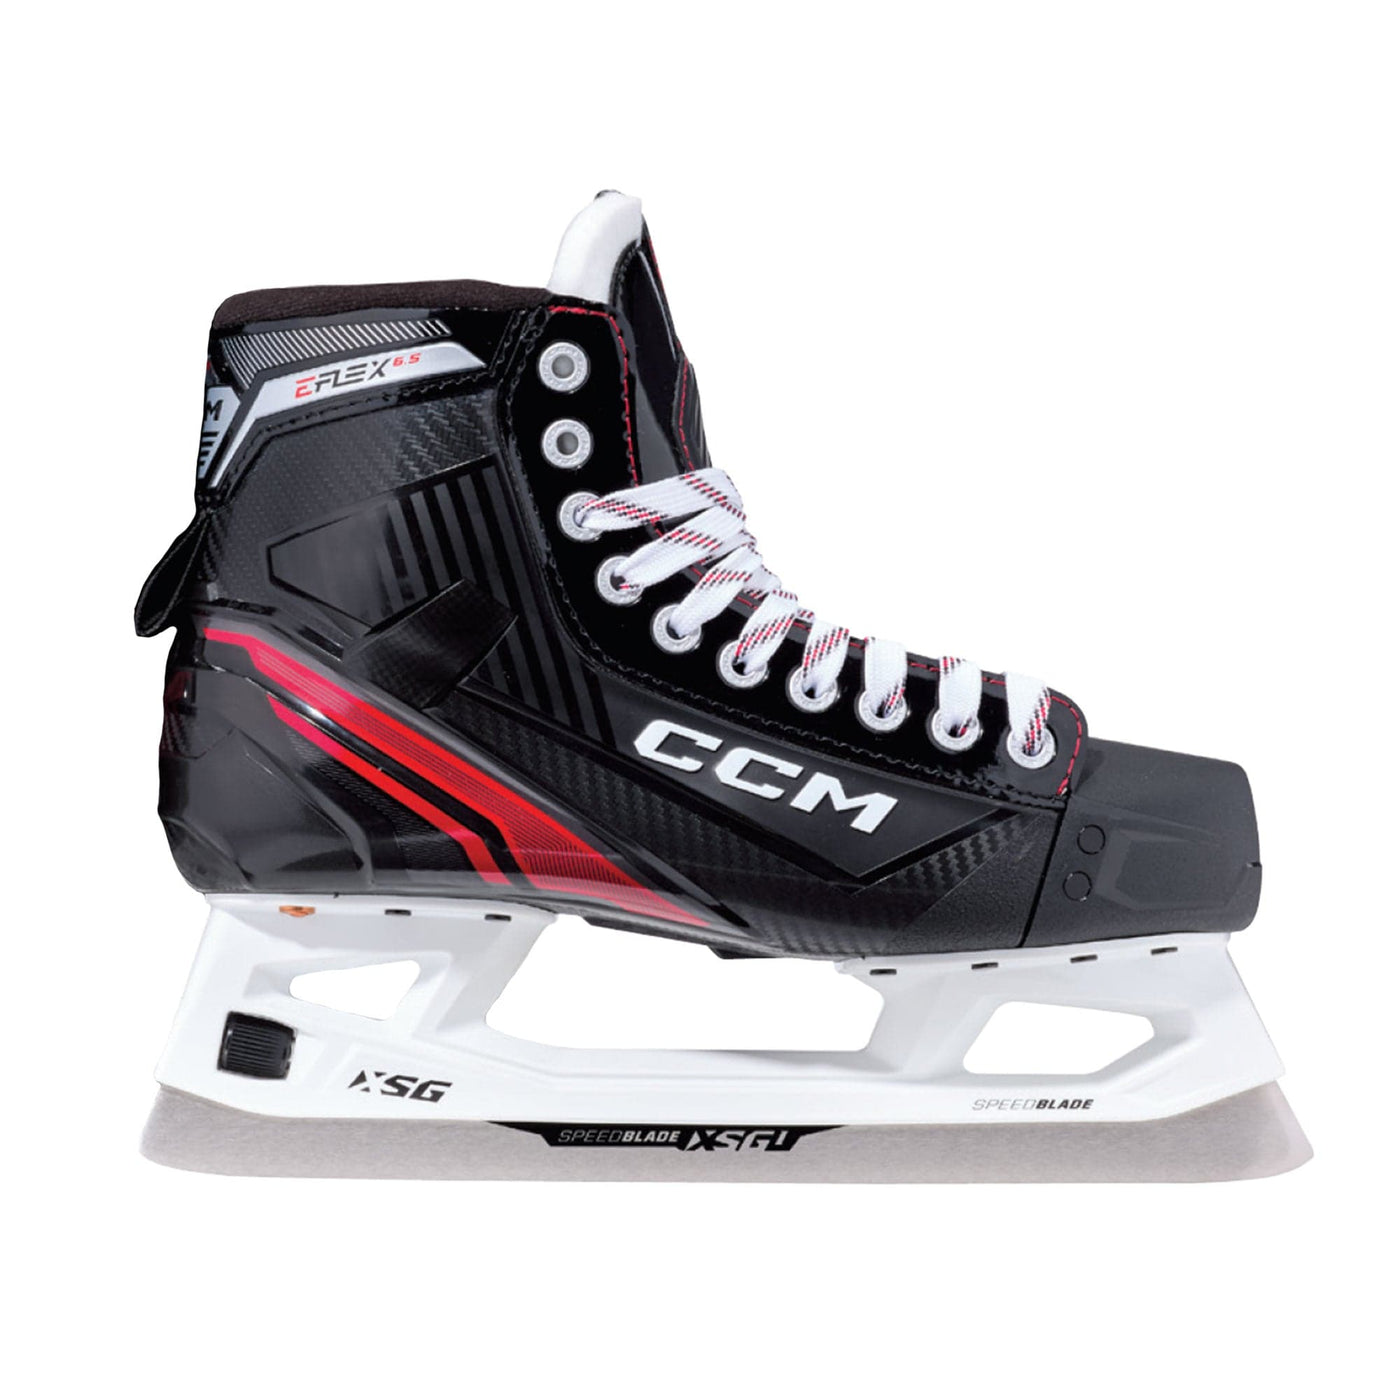 CCM Extreme Flex E6.5 Youth Goalie Skates - The Hockey Shop Source For Sports